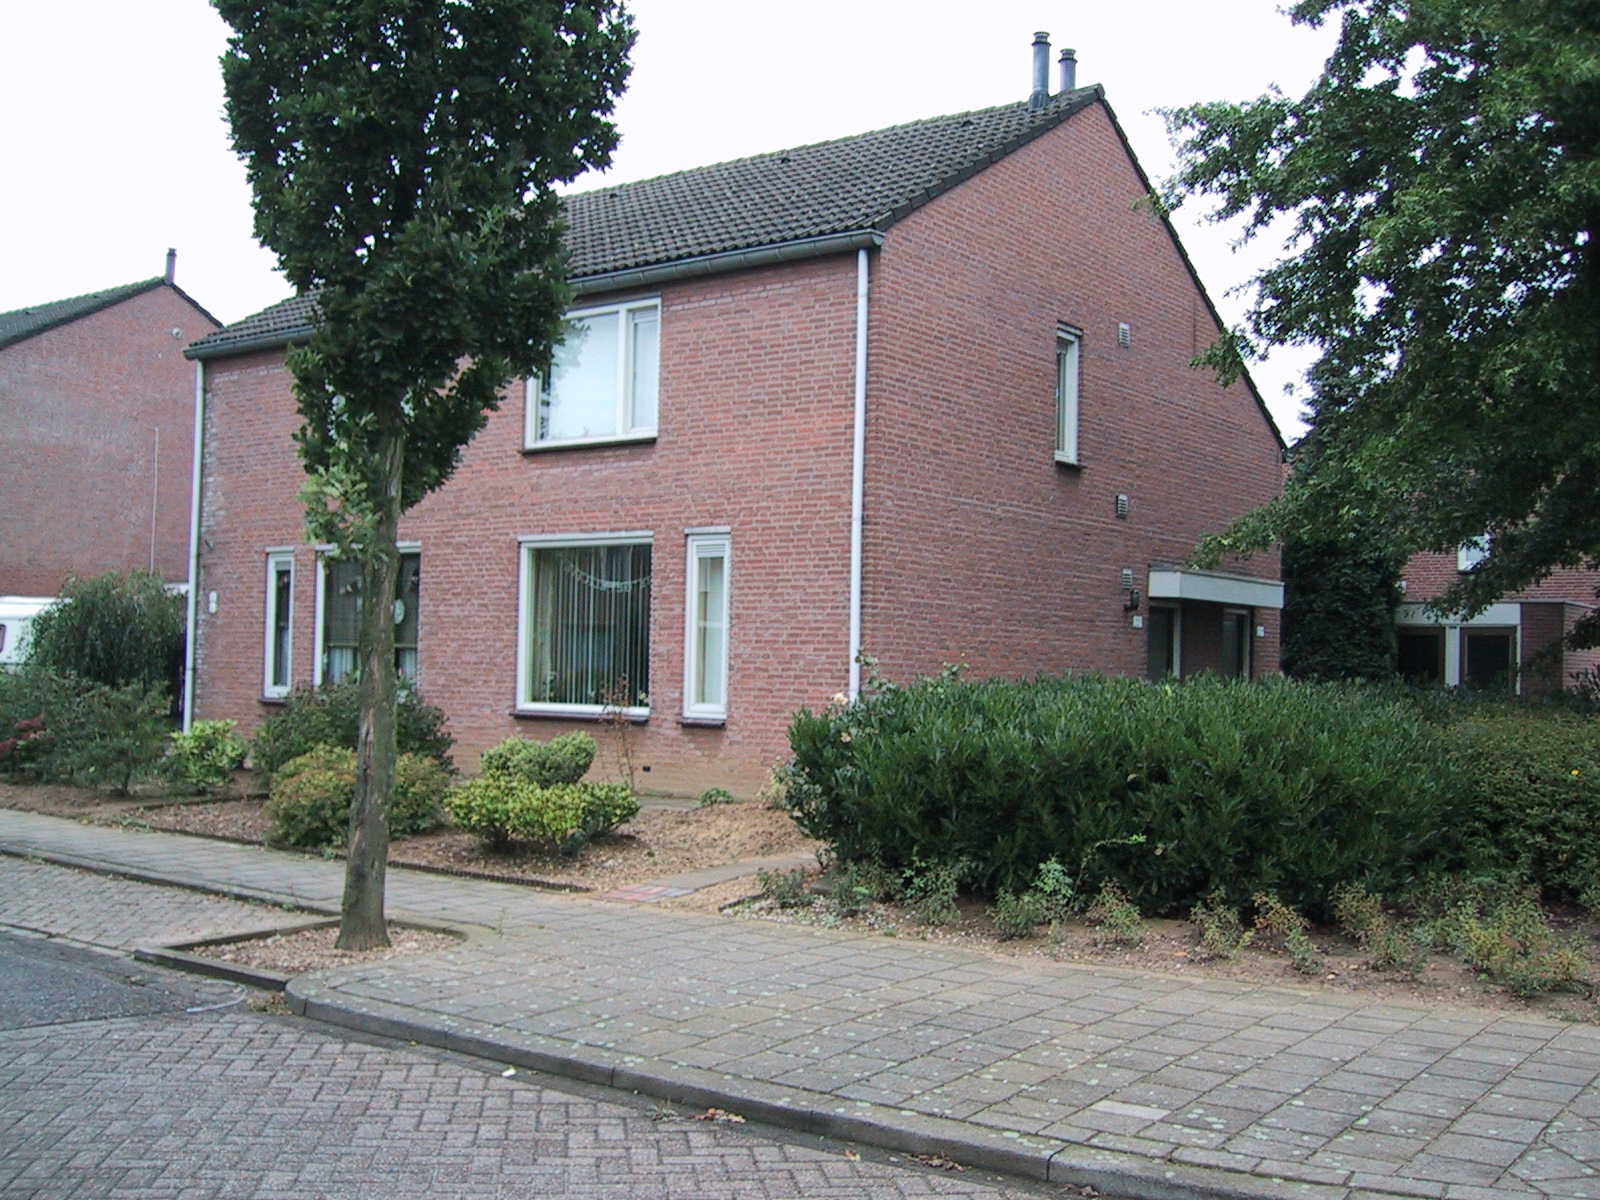 Luikstraat 8, 6051 LK Maasbracht, Nederland